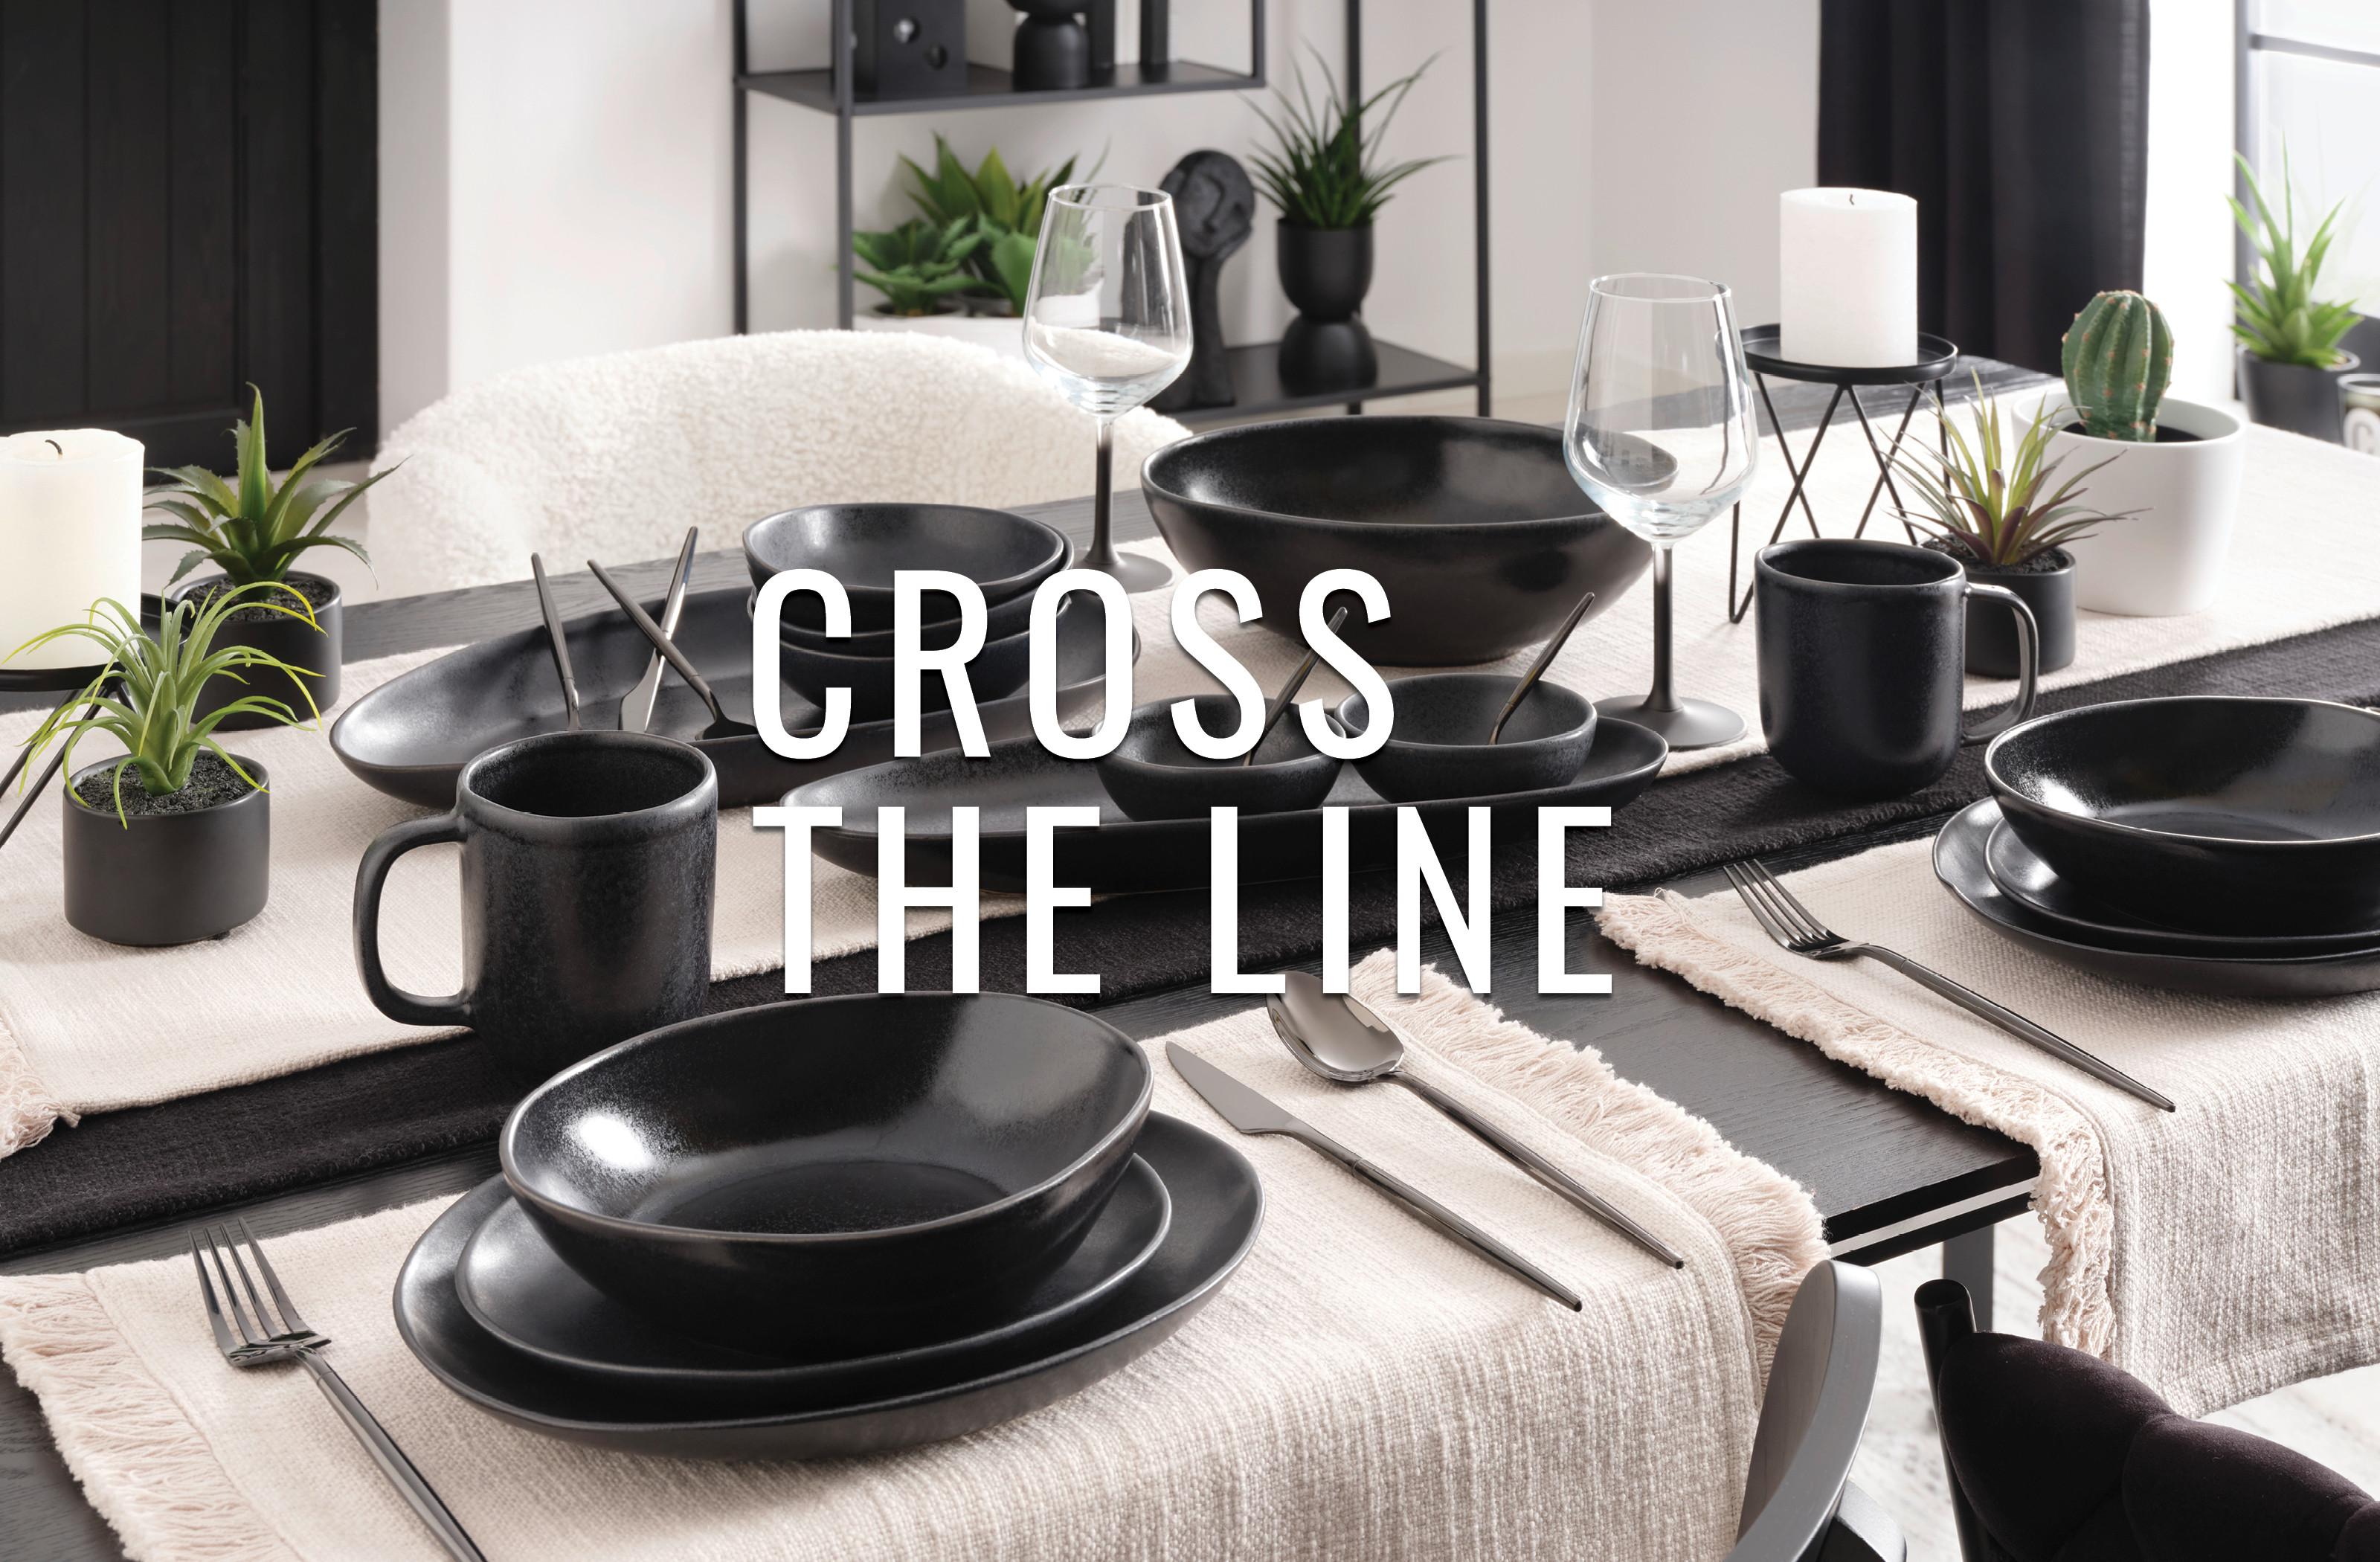 cross the line, černo bílá kombinace v interiérovém designu